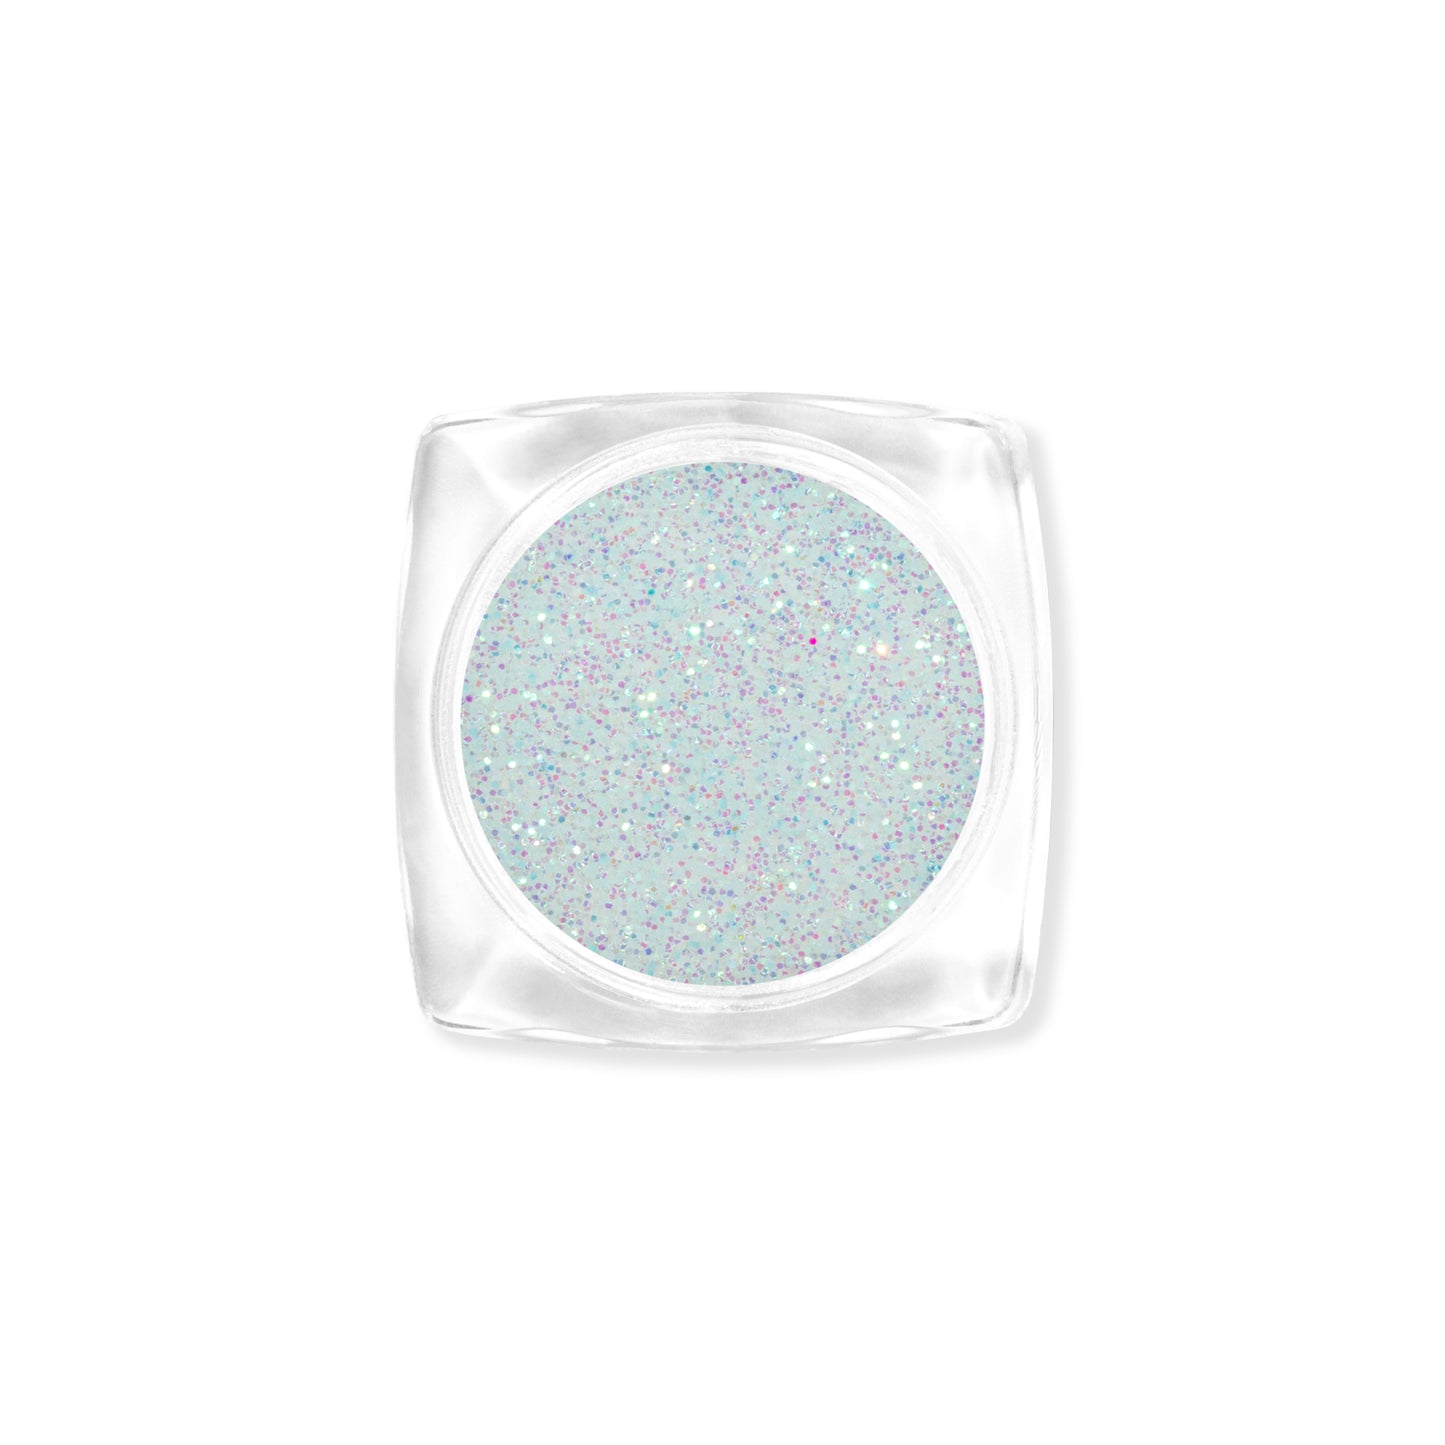 Mesauda MNP - Chrome Powder - Sparkly Glitter